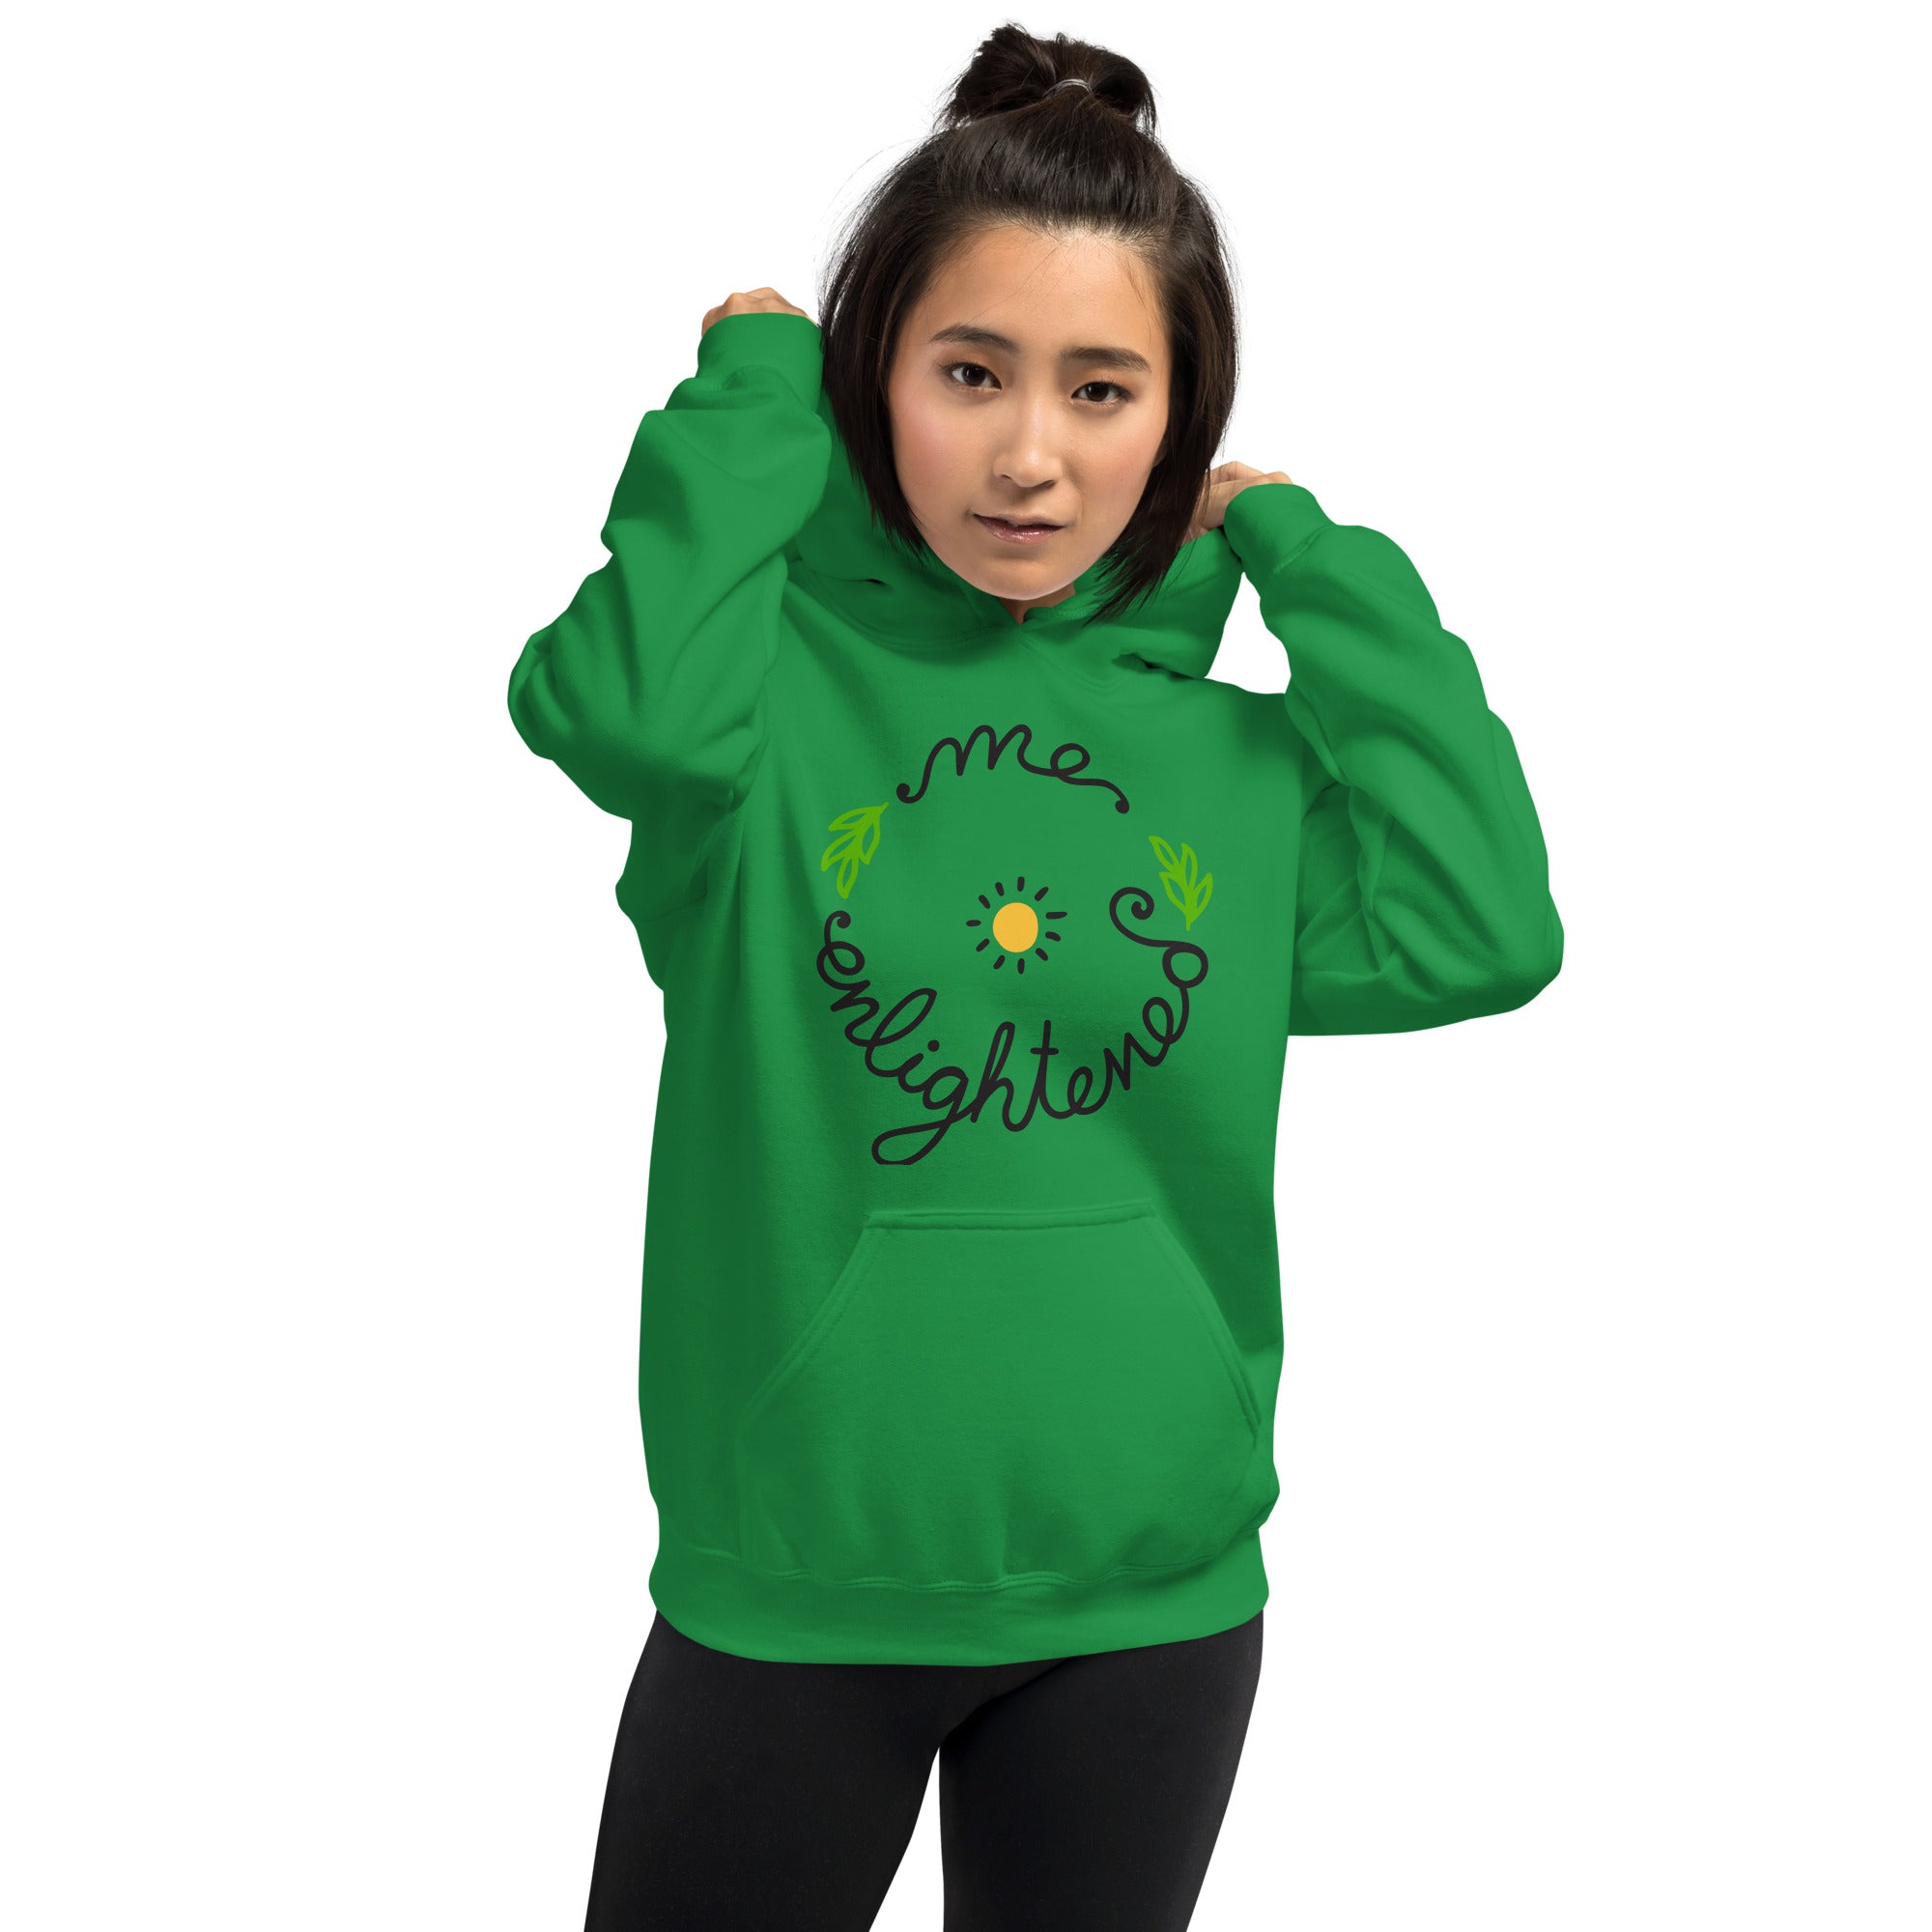 Enlightened Inspirational Hoodie & Hooded Sweatshirt for Women